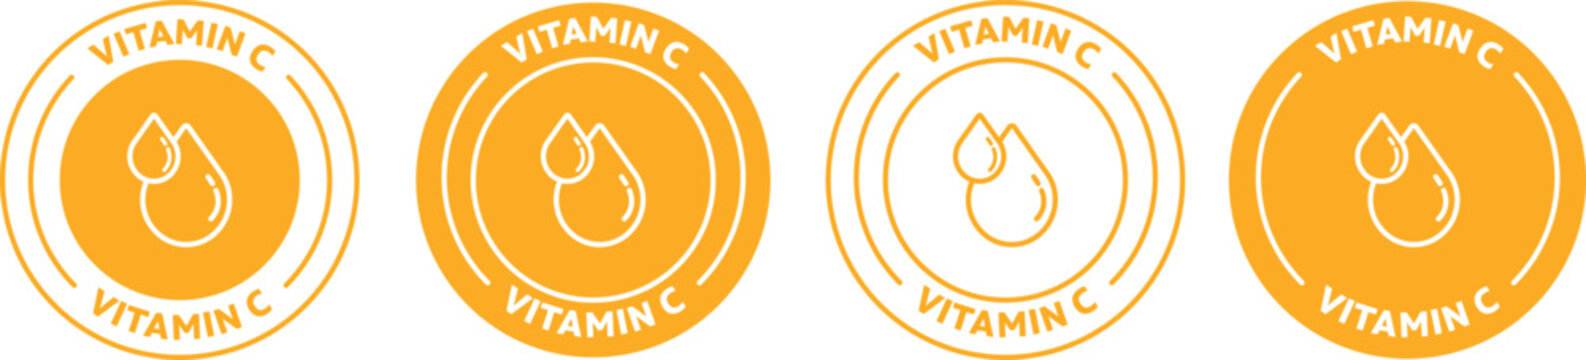 vitamin c icon. Badge, symbol, logo vector on transparent background.